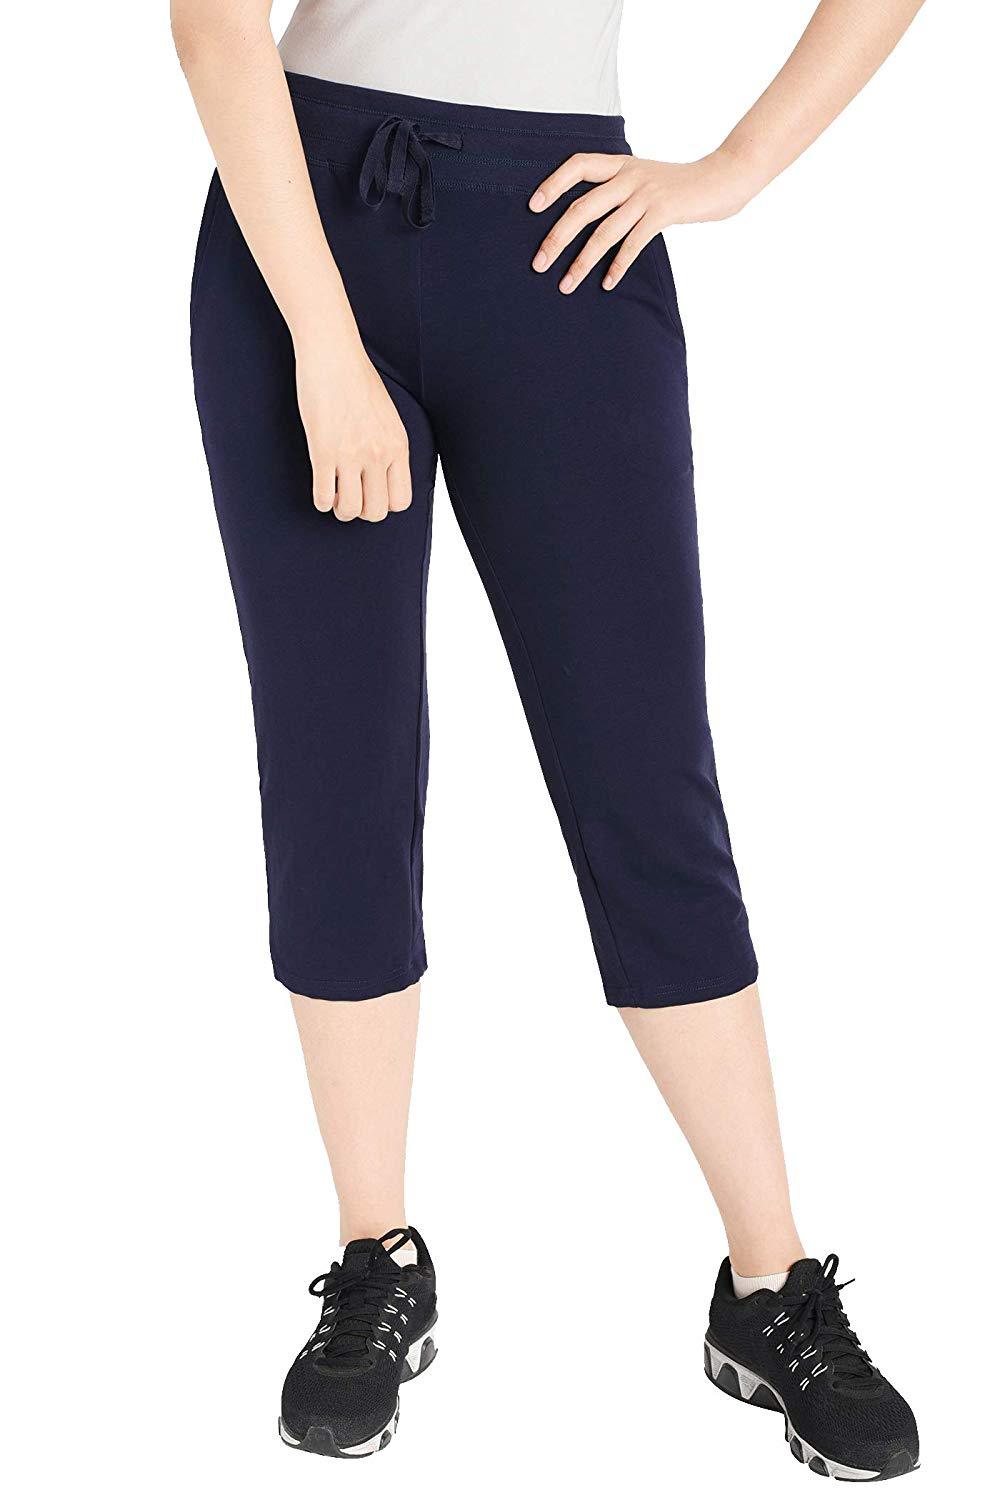 Women's Cotton Joggers Knit Capri Pants with Pockets - Latuza